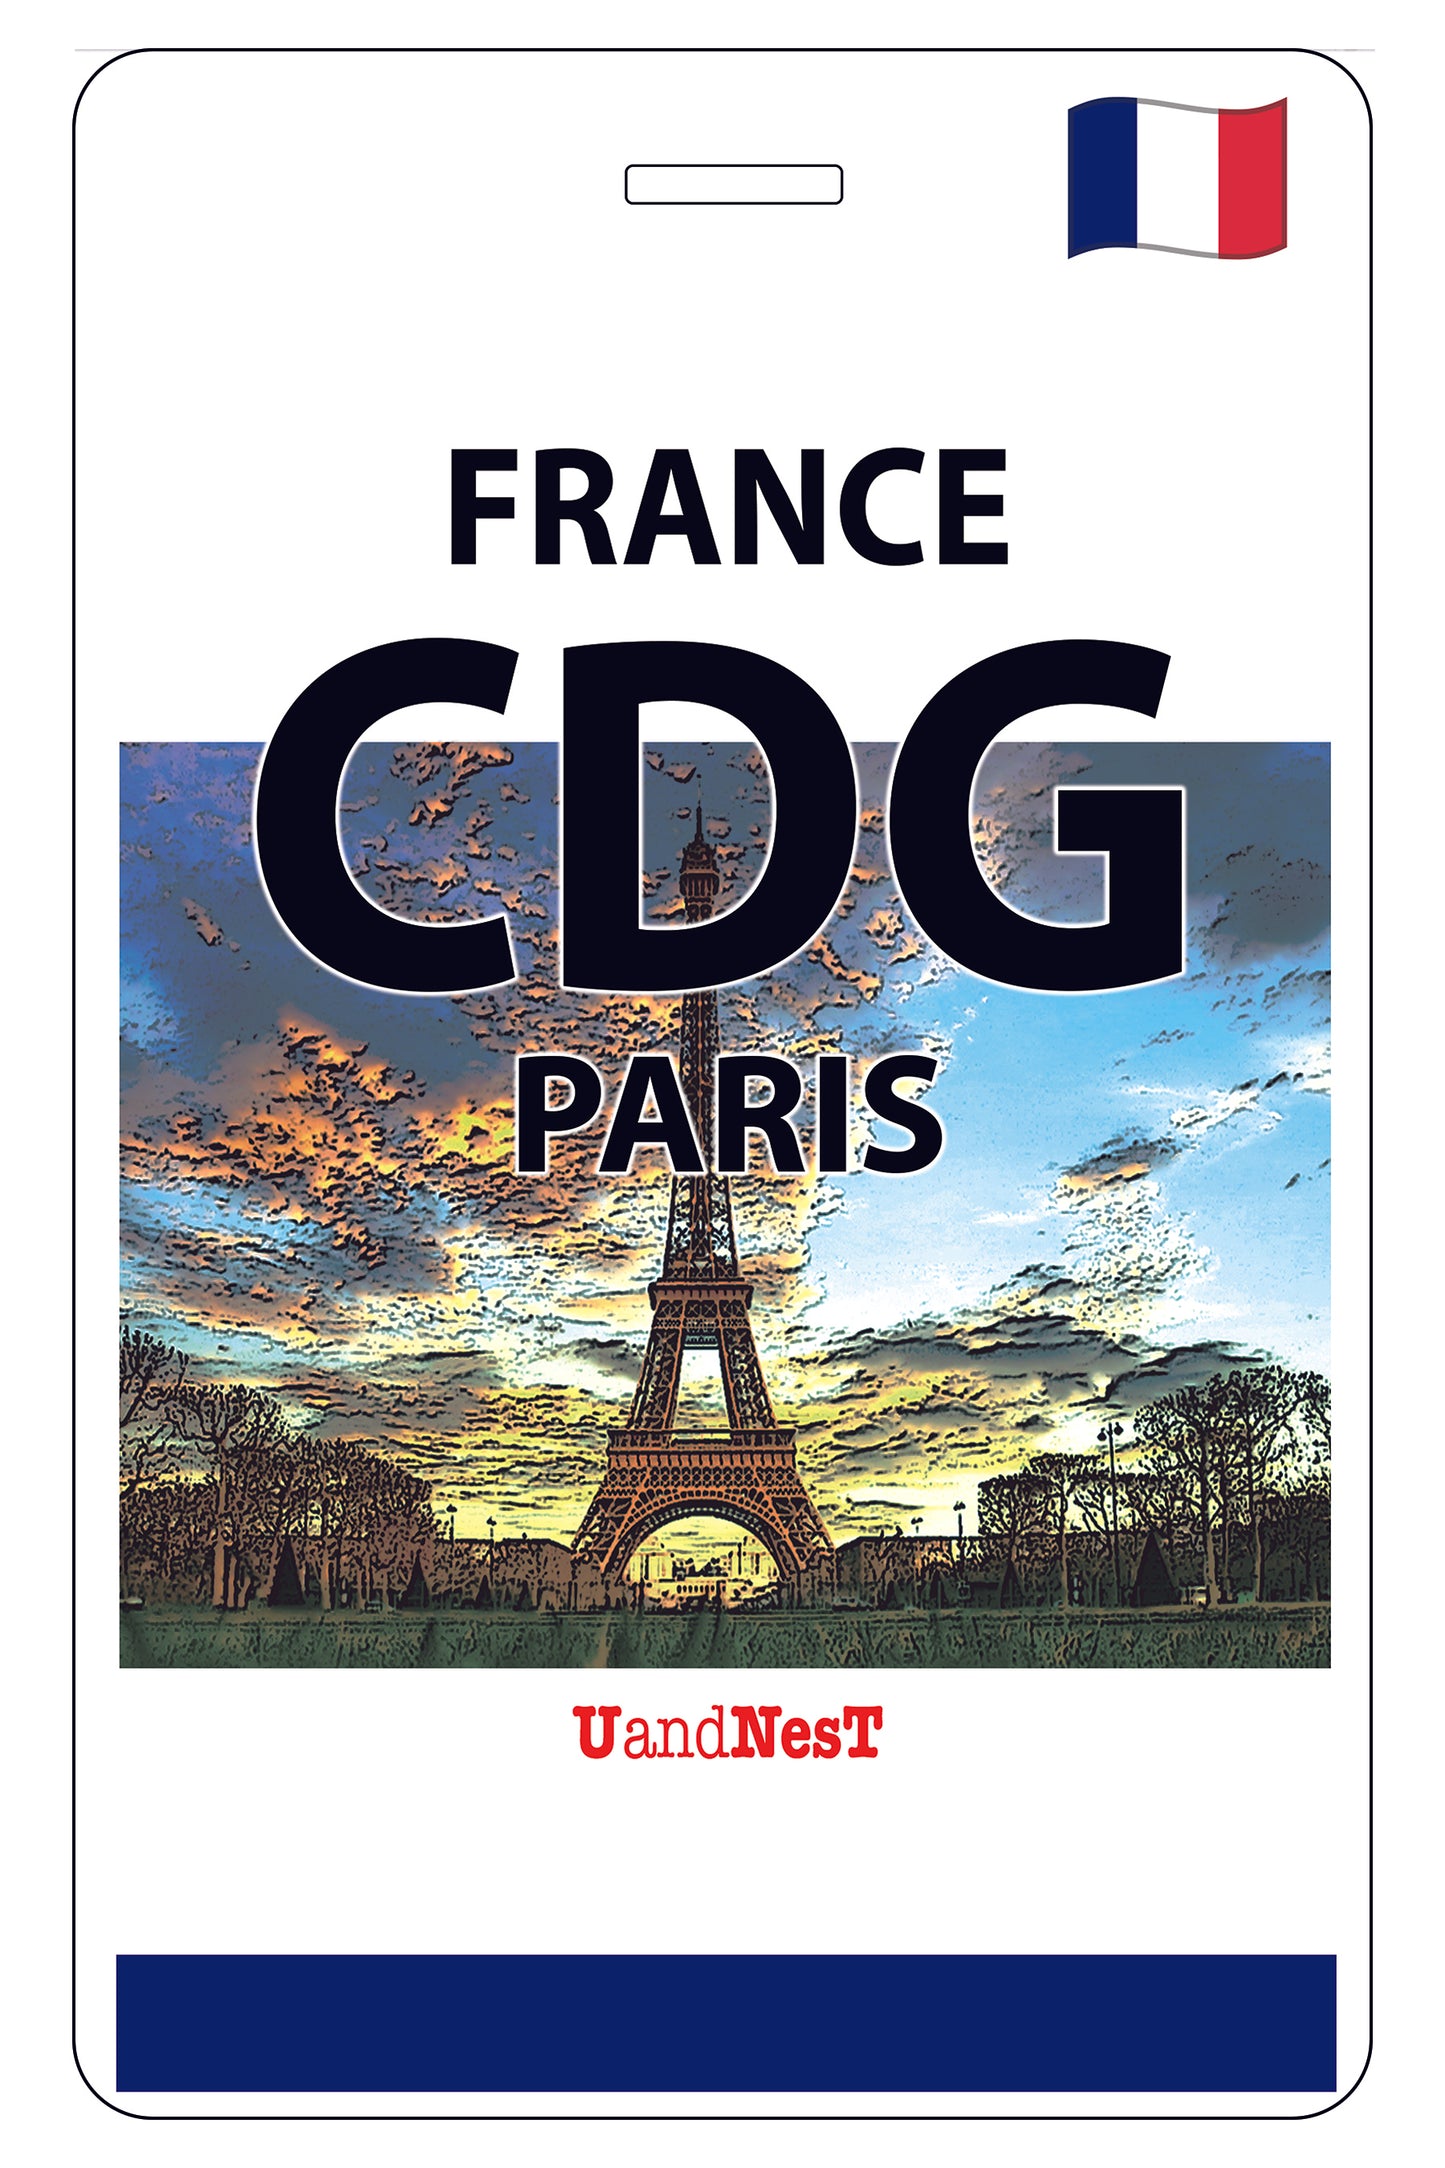 CDG Paris France